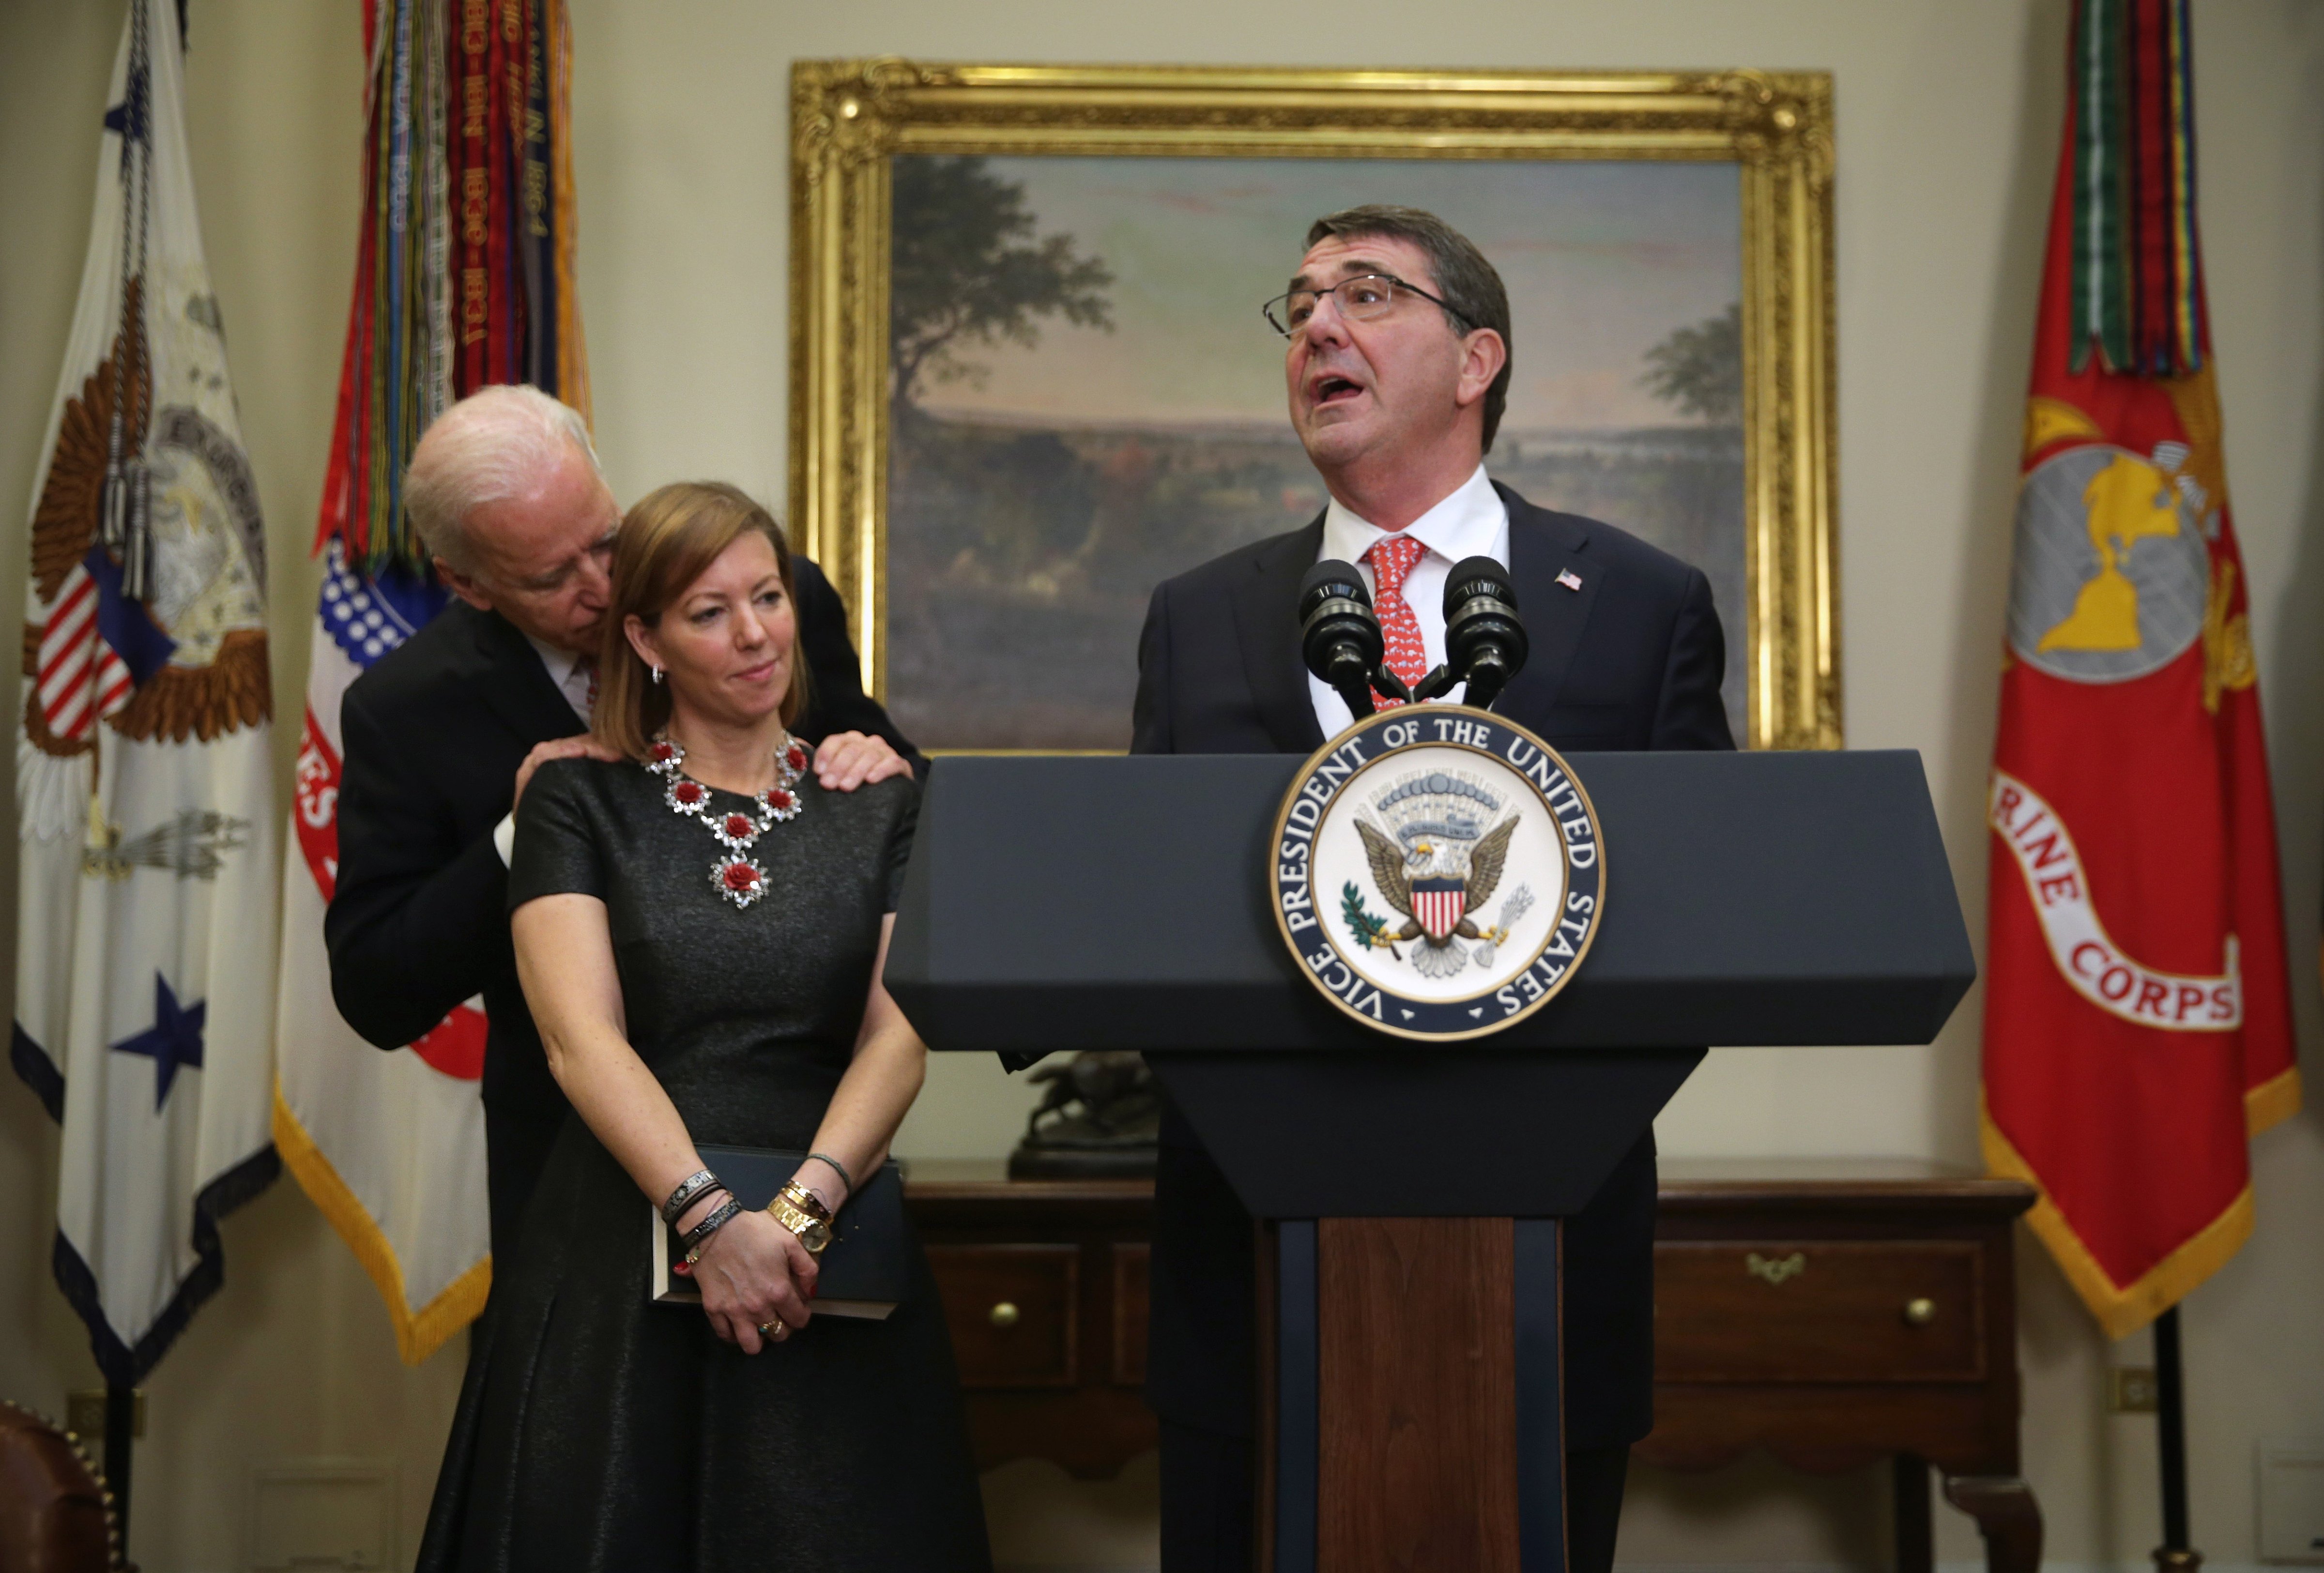 Joe Biden Swears In New Defense Secretary Ashton Carter